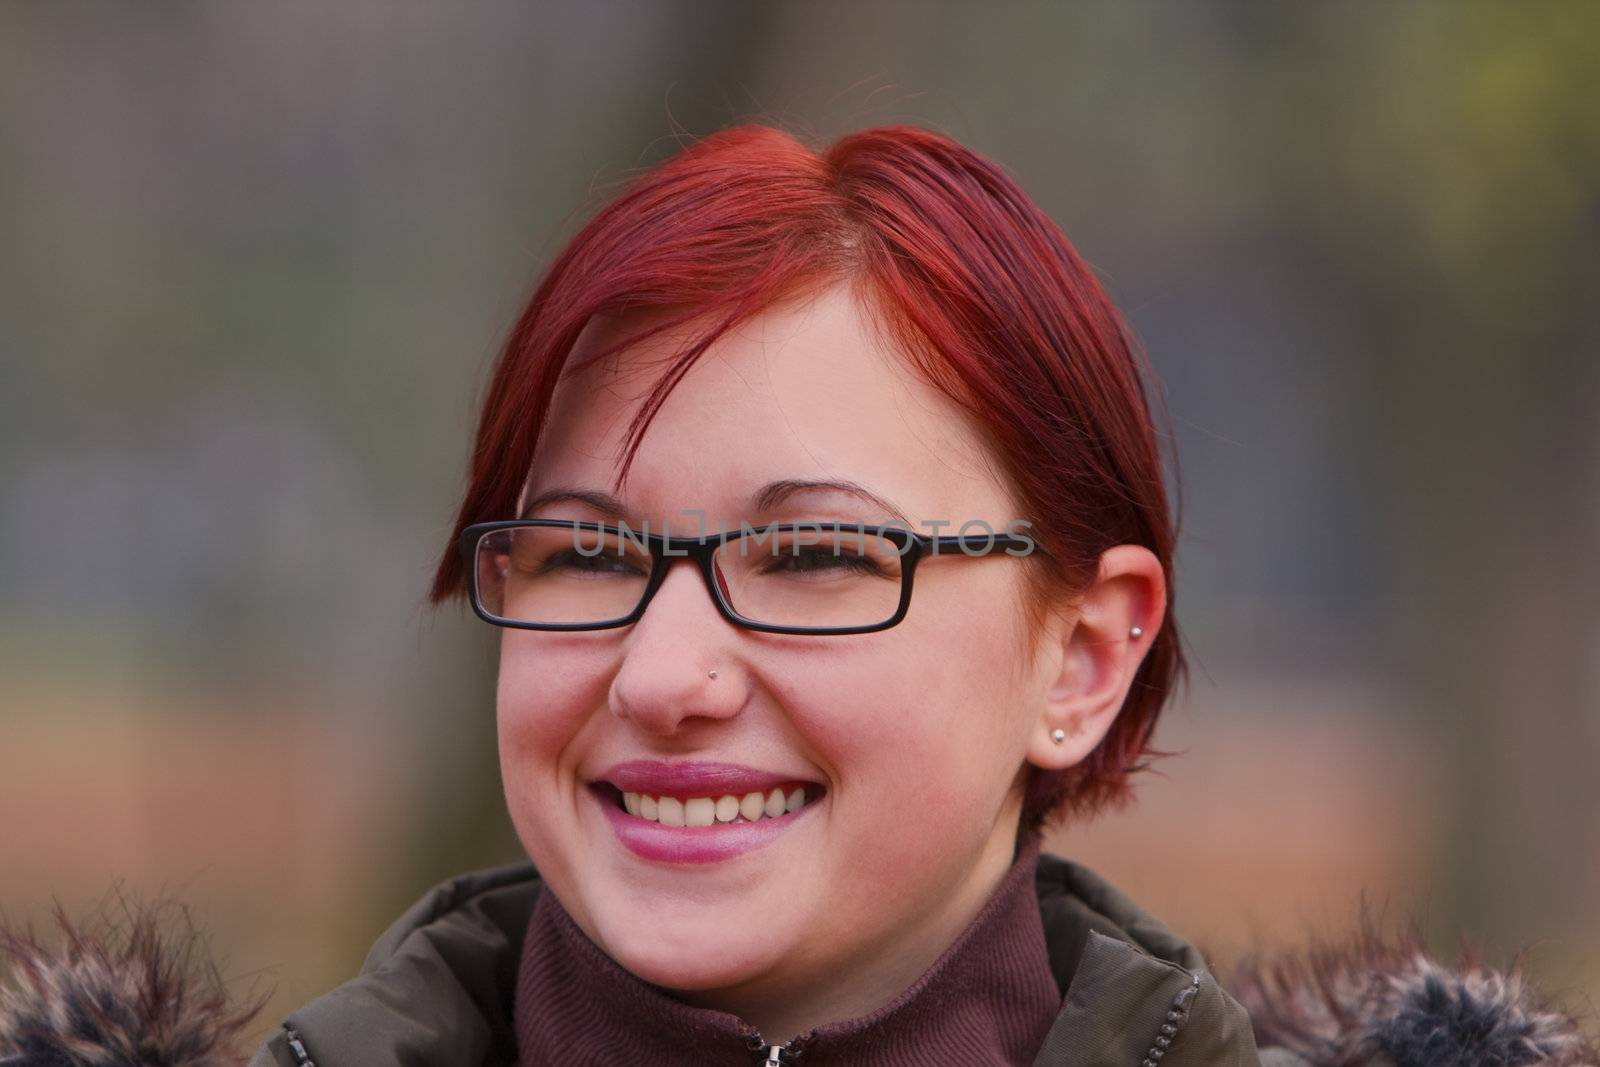 Smiling redheaded girl by RazvanPhotography